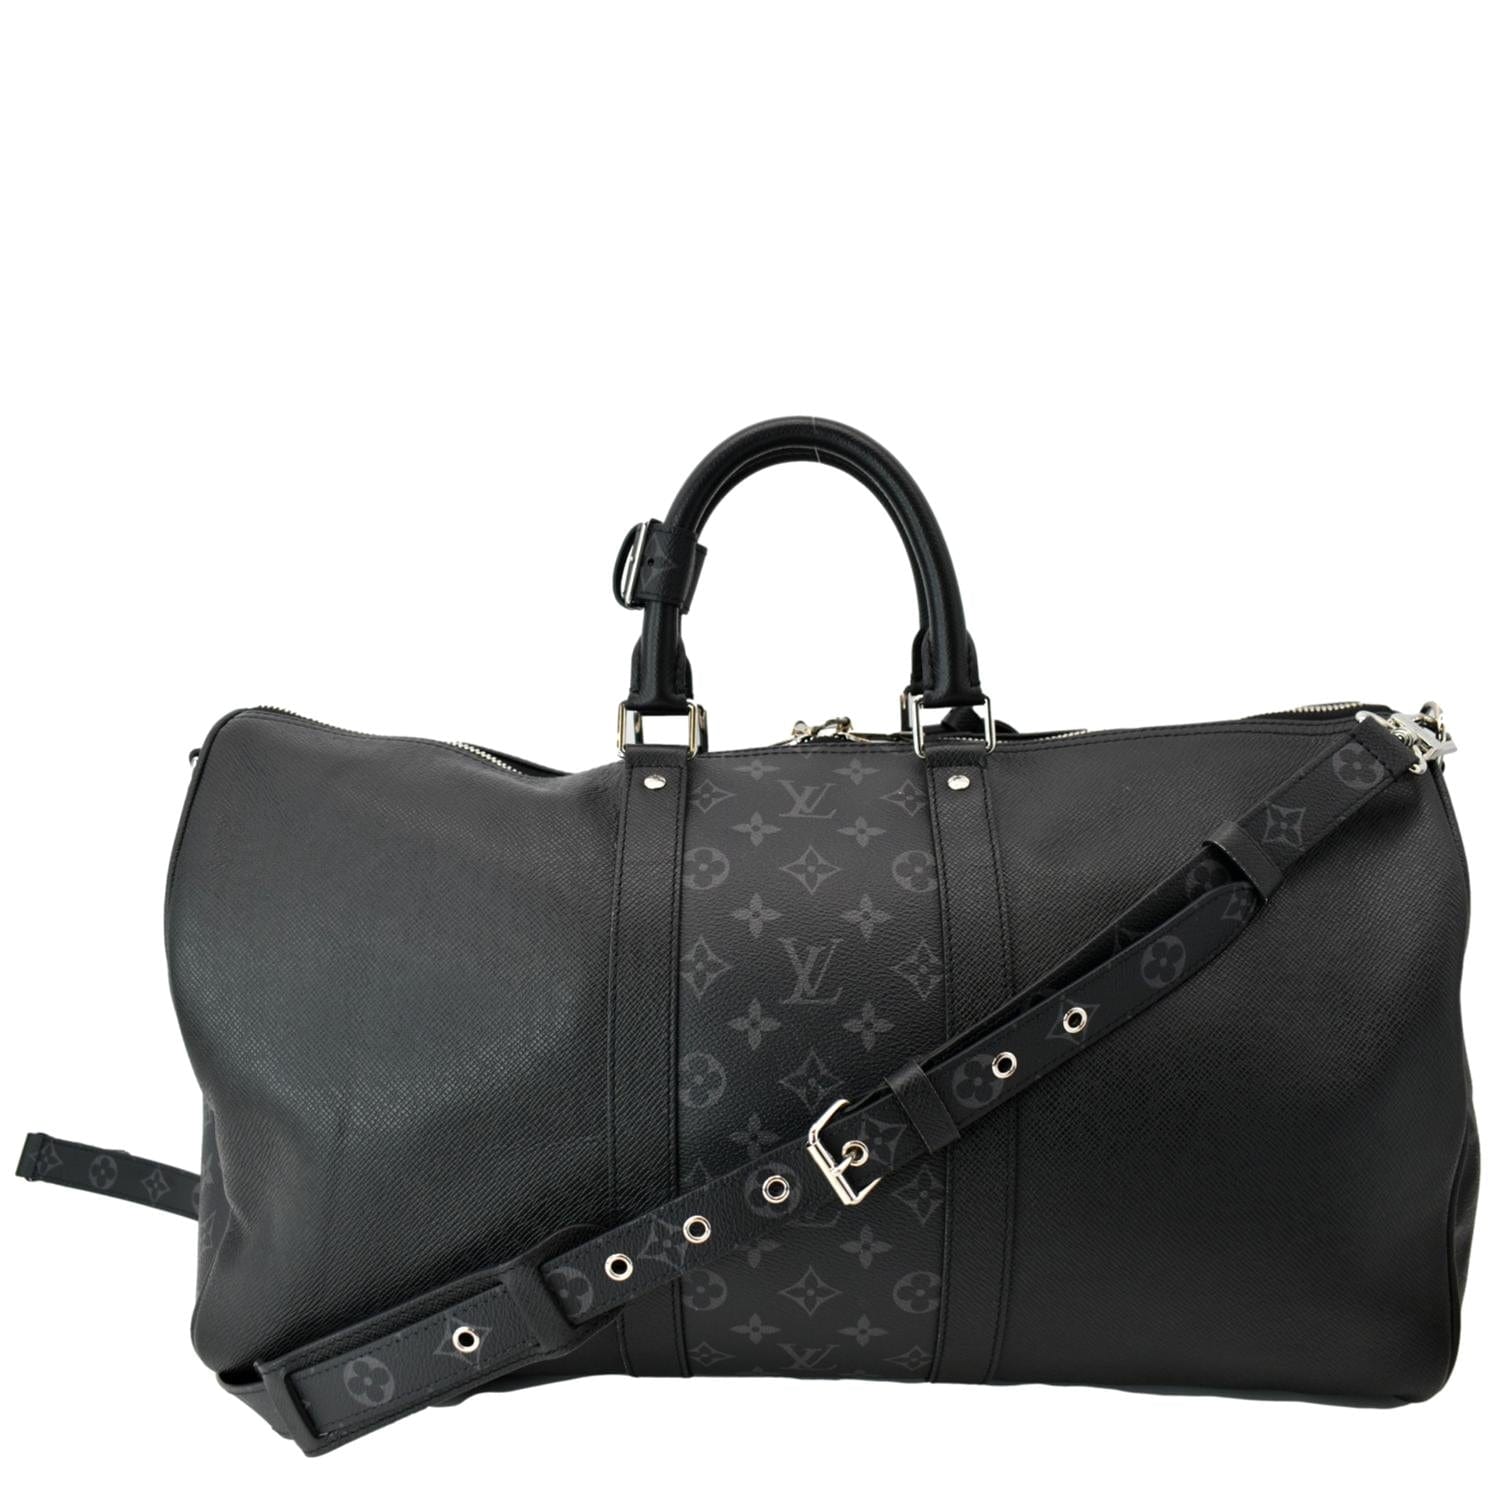 Louis Vuitton Keepall Bandouliere Taiga 50 Black/Rainbow in Taiga Leather